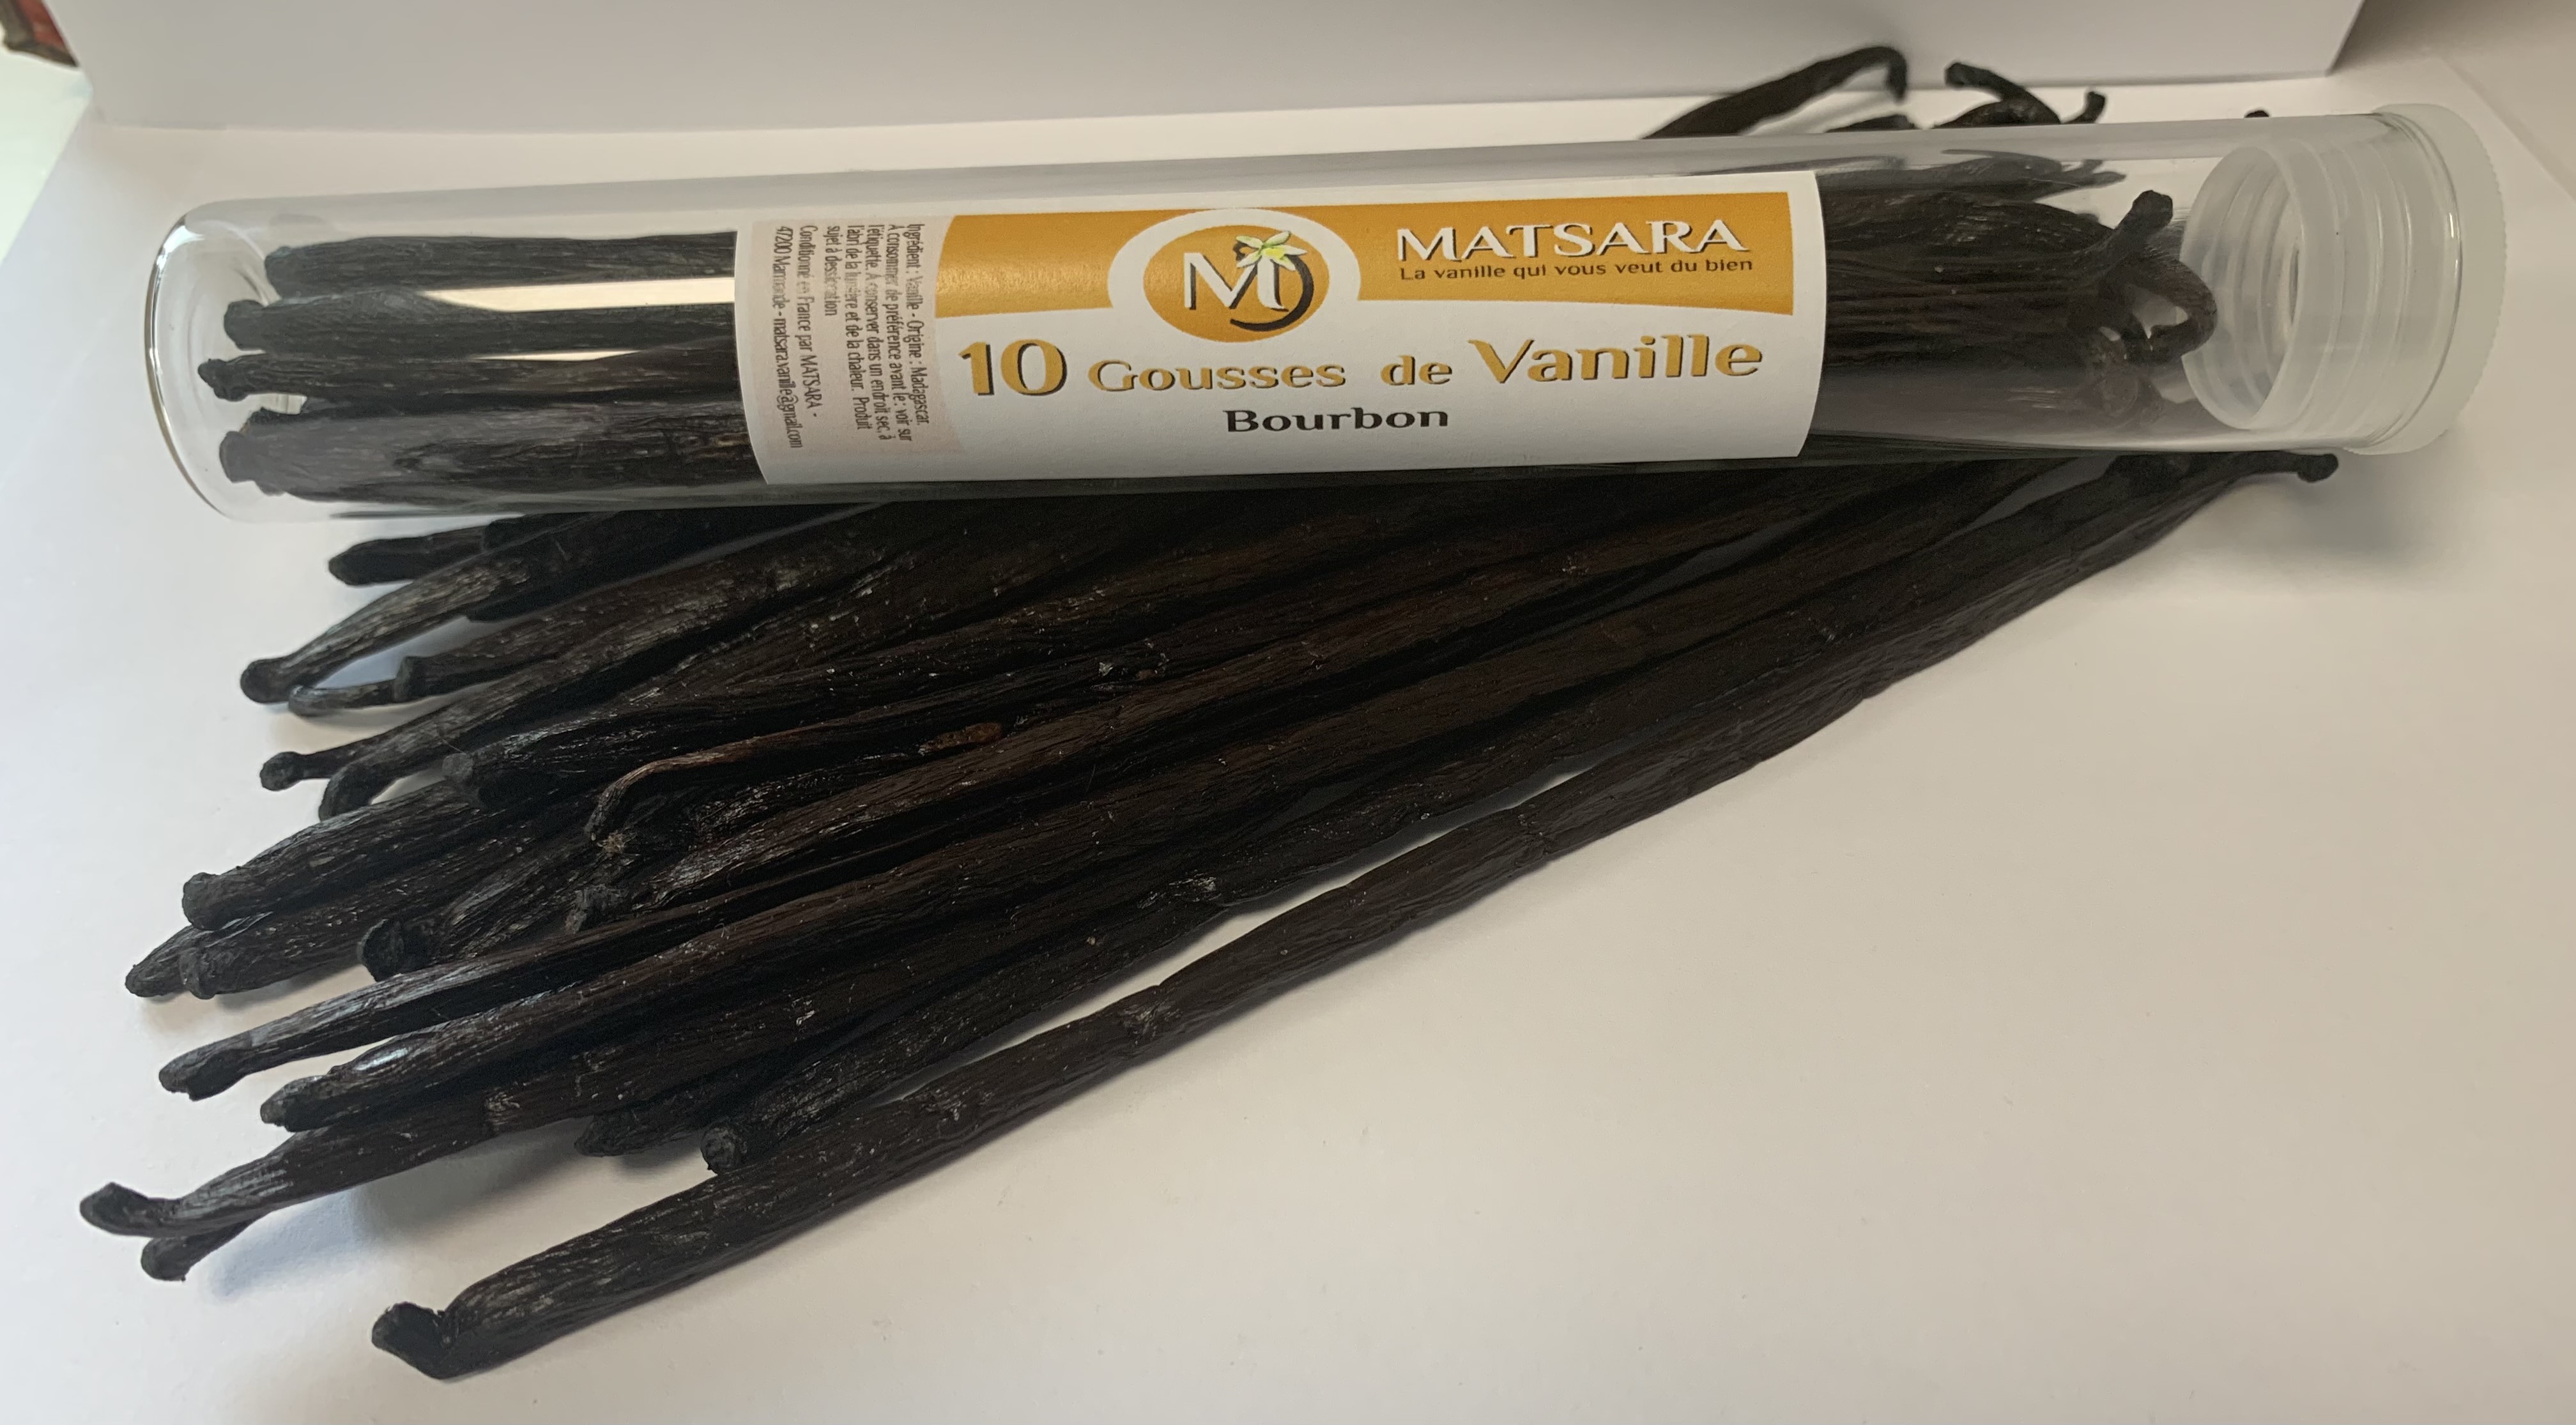  Vanille de MADAGASCAR MATSARA Bourbon 10 Gousses 